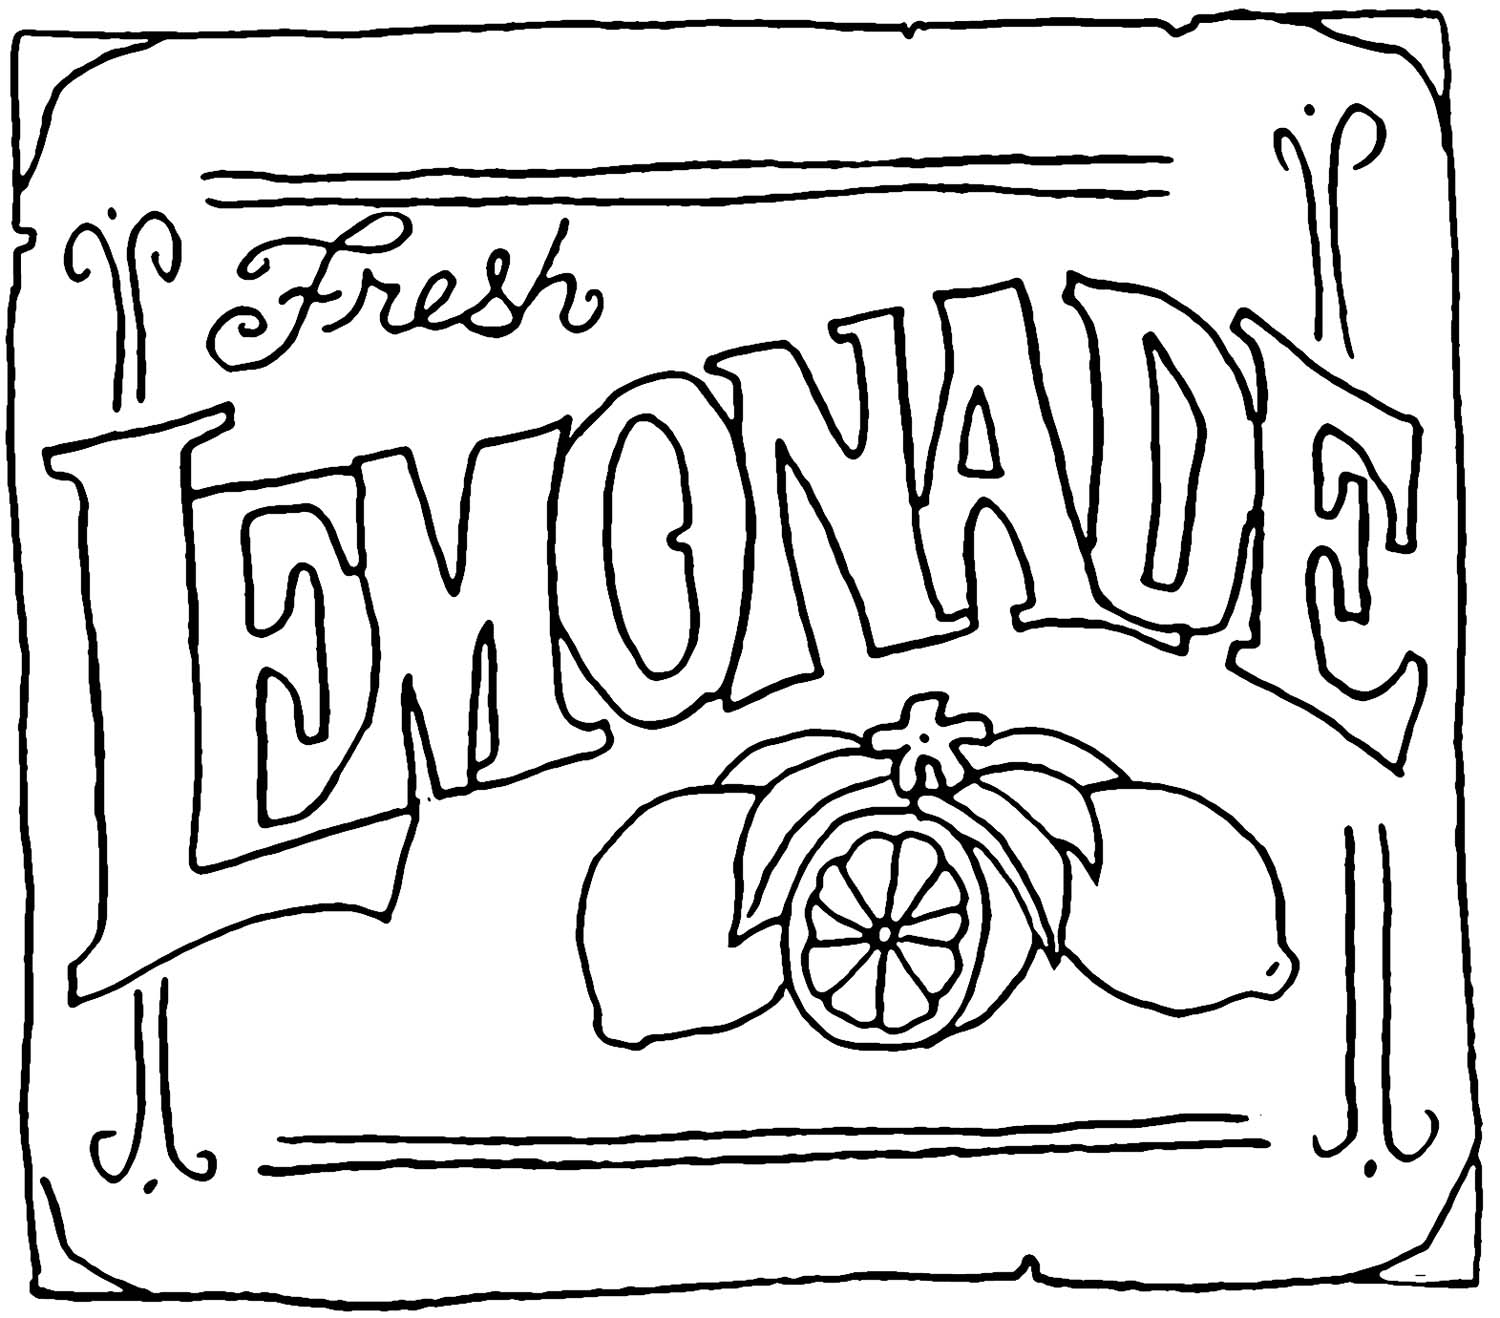 Lemonade coloring pages